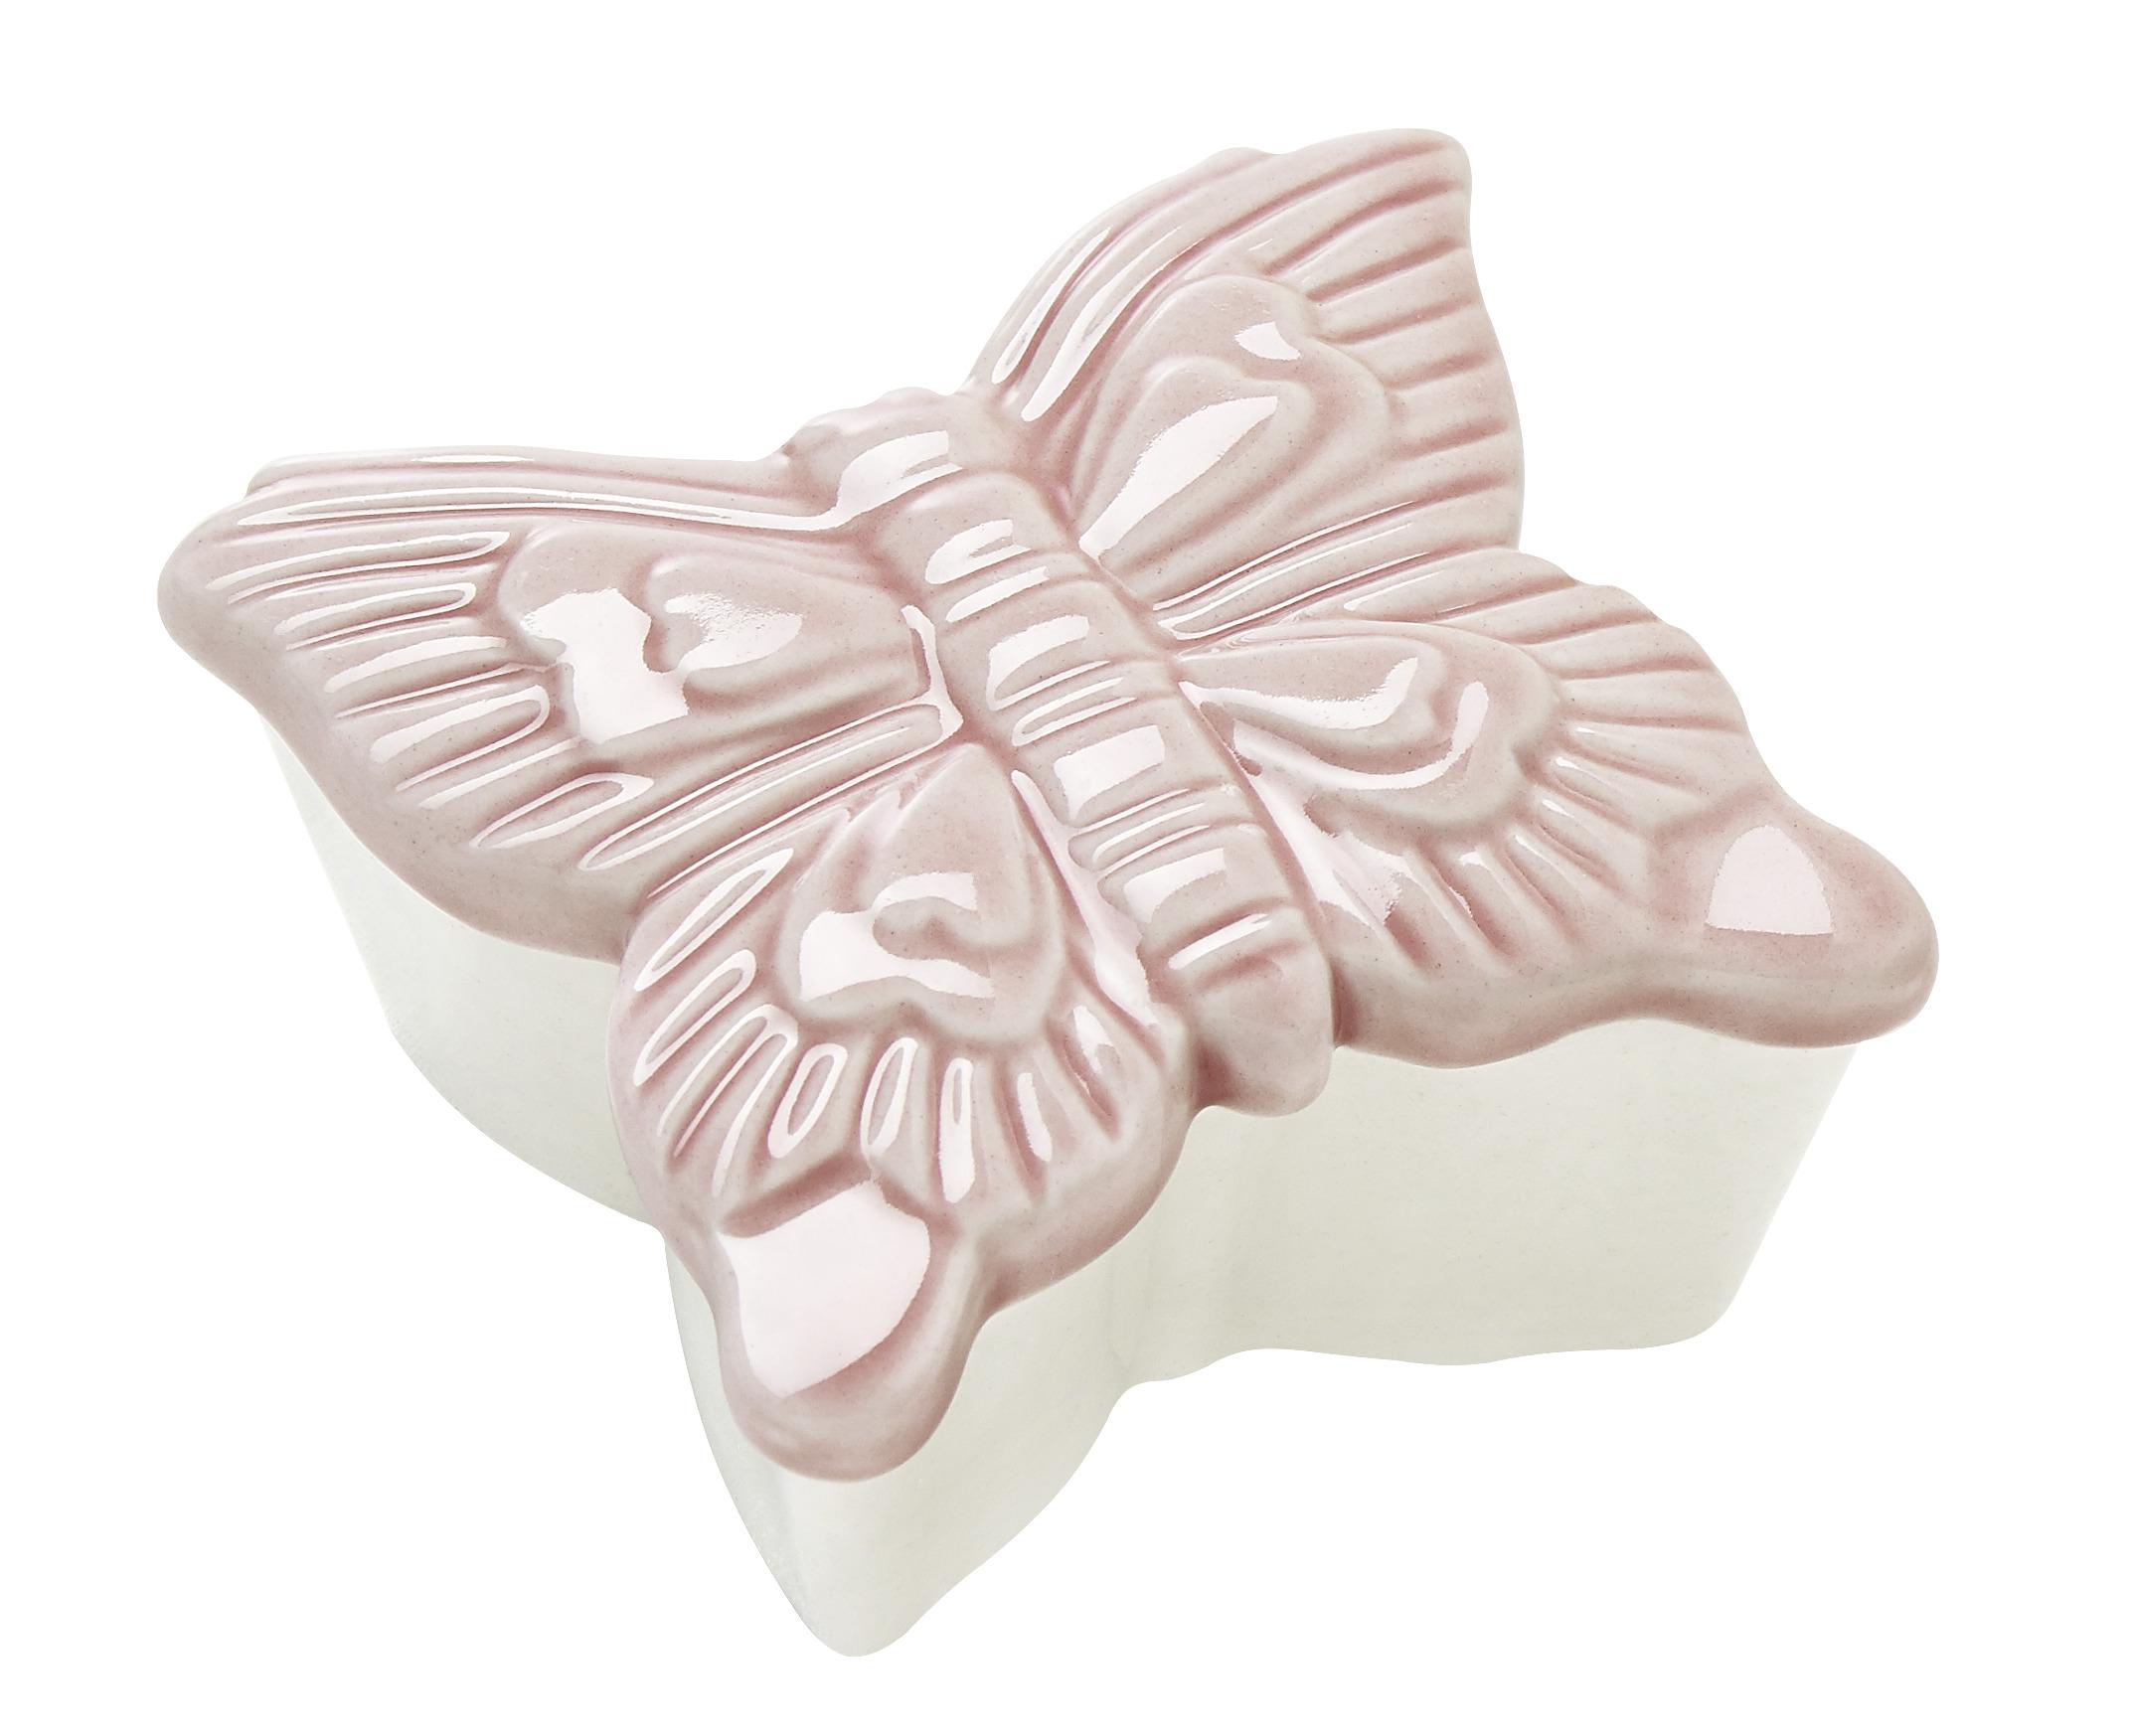 Dose Butterfly in Rosa/Weiß - Rosa/Weiß, Keramik (7,5/4,5/7,5cm) - Modern Living